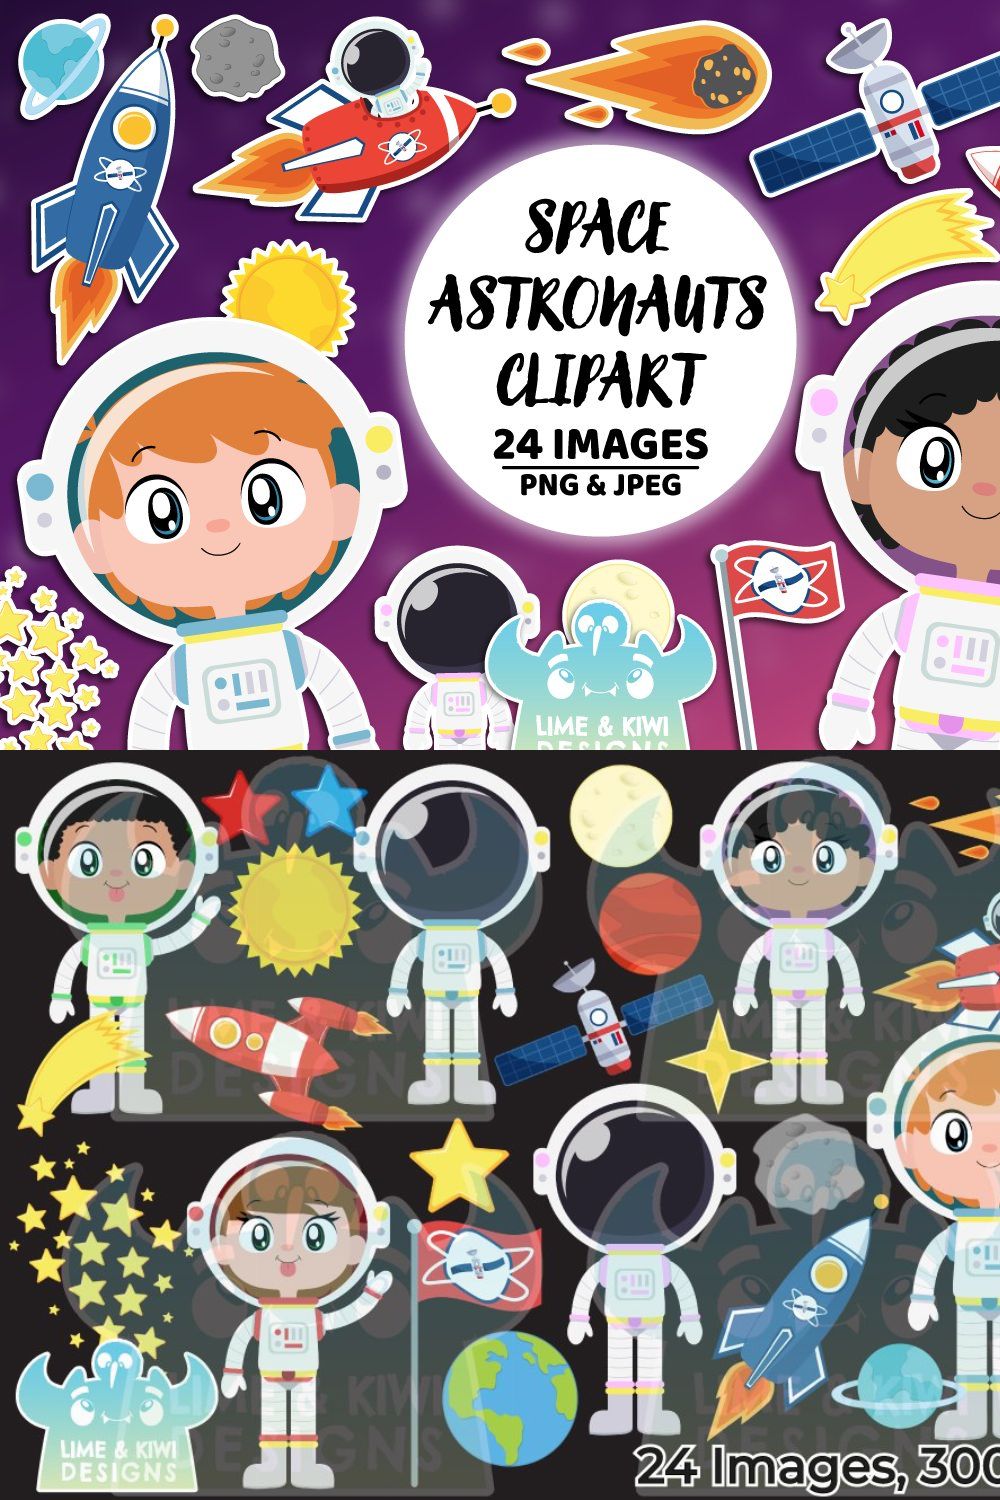 Space Astronauts Clipart pinterest preview image.